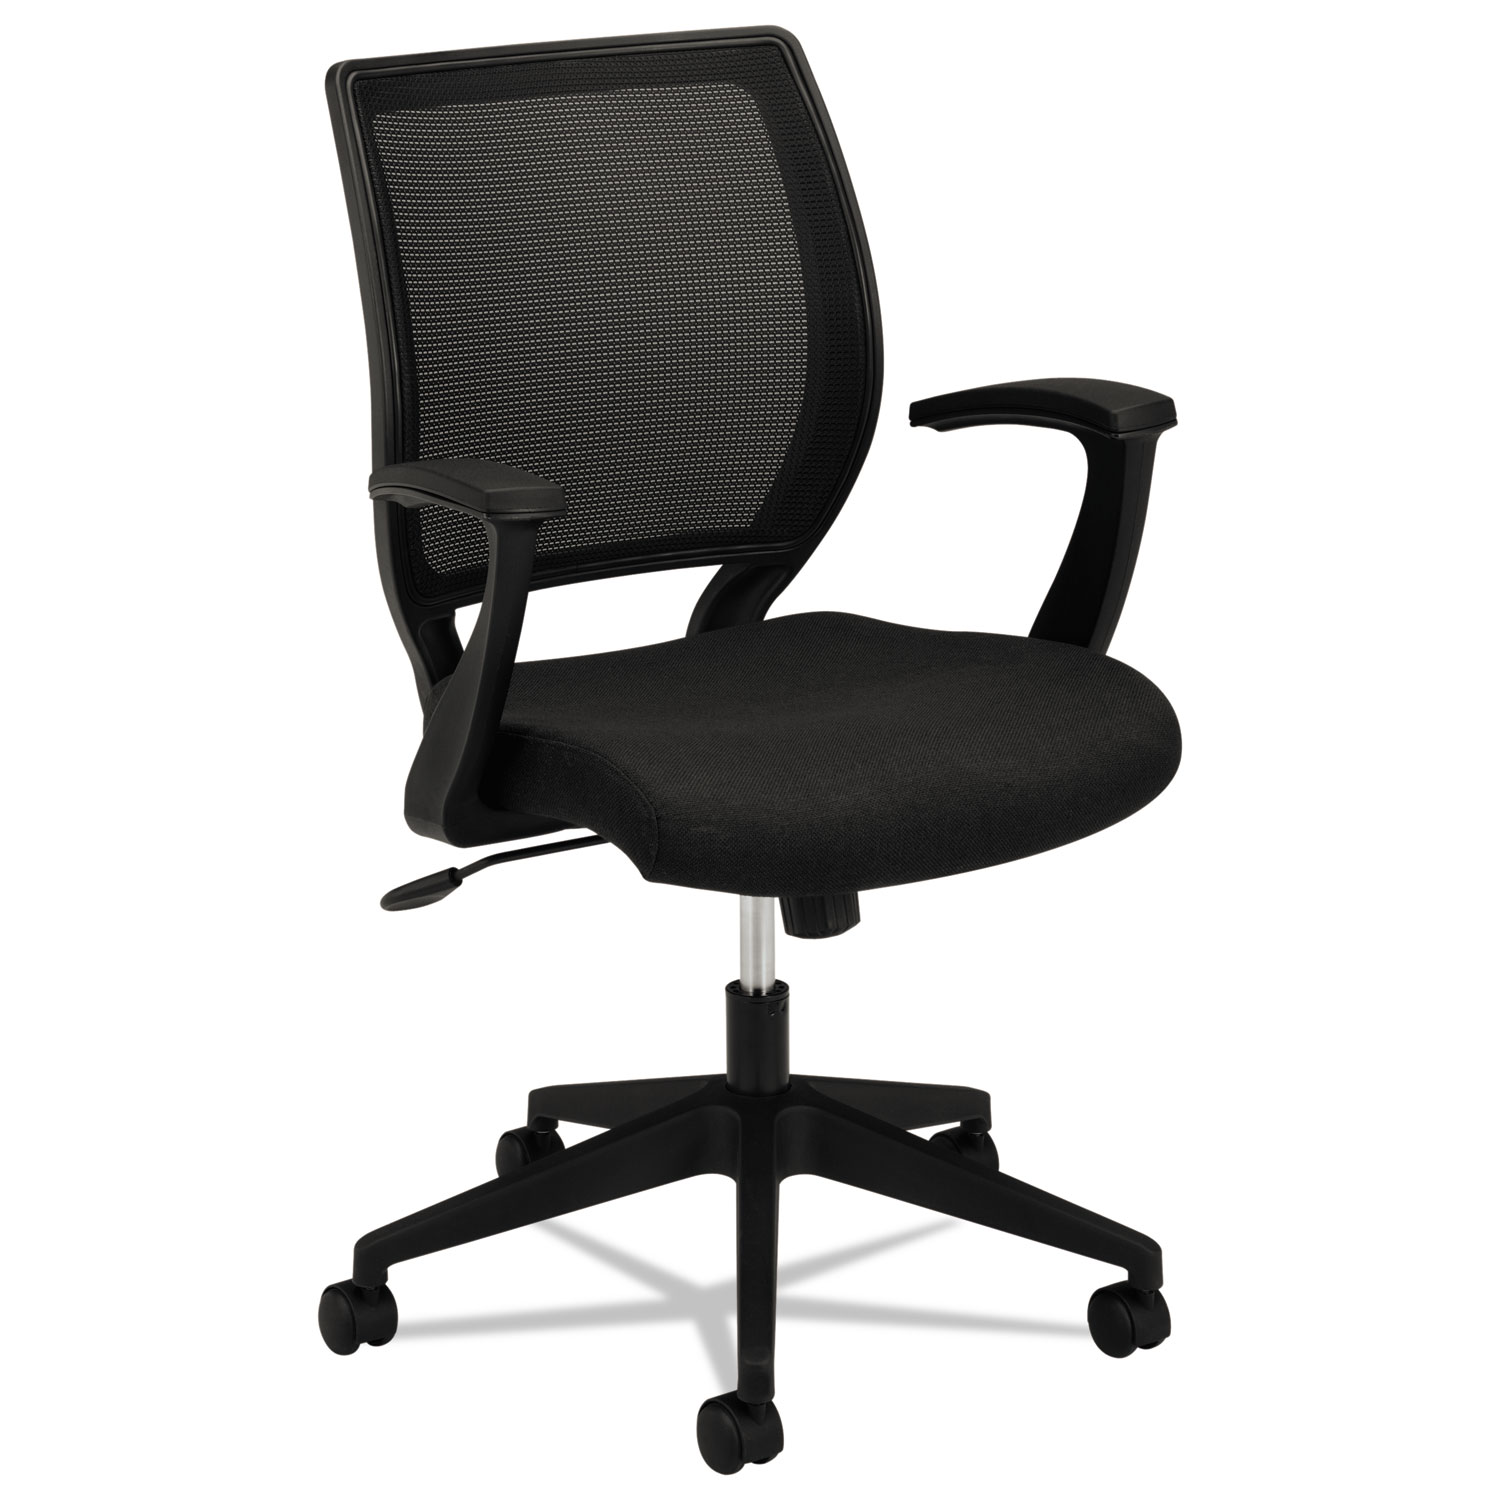  HON HVL521.VA10 HVL521 Mesh Mid-Back Task Chair, Supports up to 250 lbs., Black Seat/Black Back, Black Base (BSXVL521VA10) 